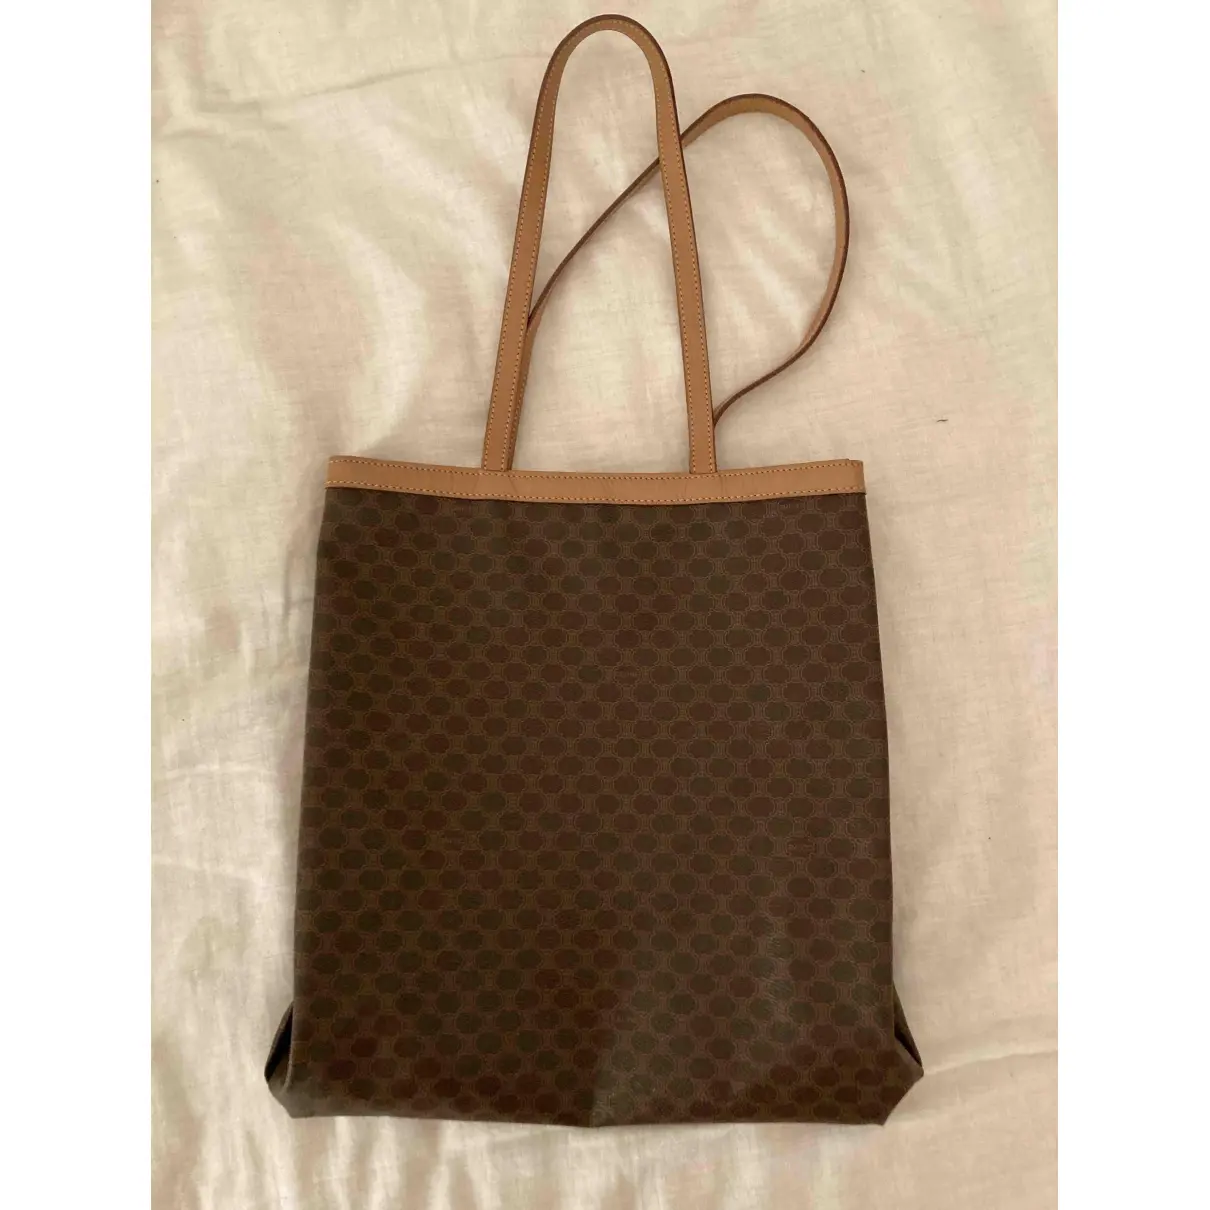 Buy Celine Classic leather crossbody bag online - Vintage